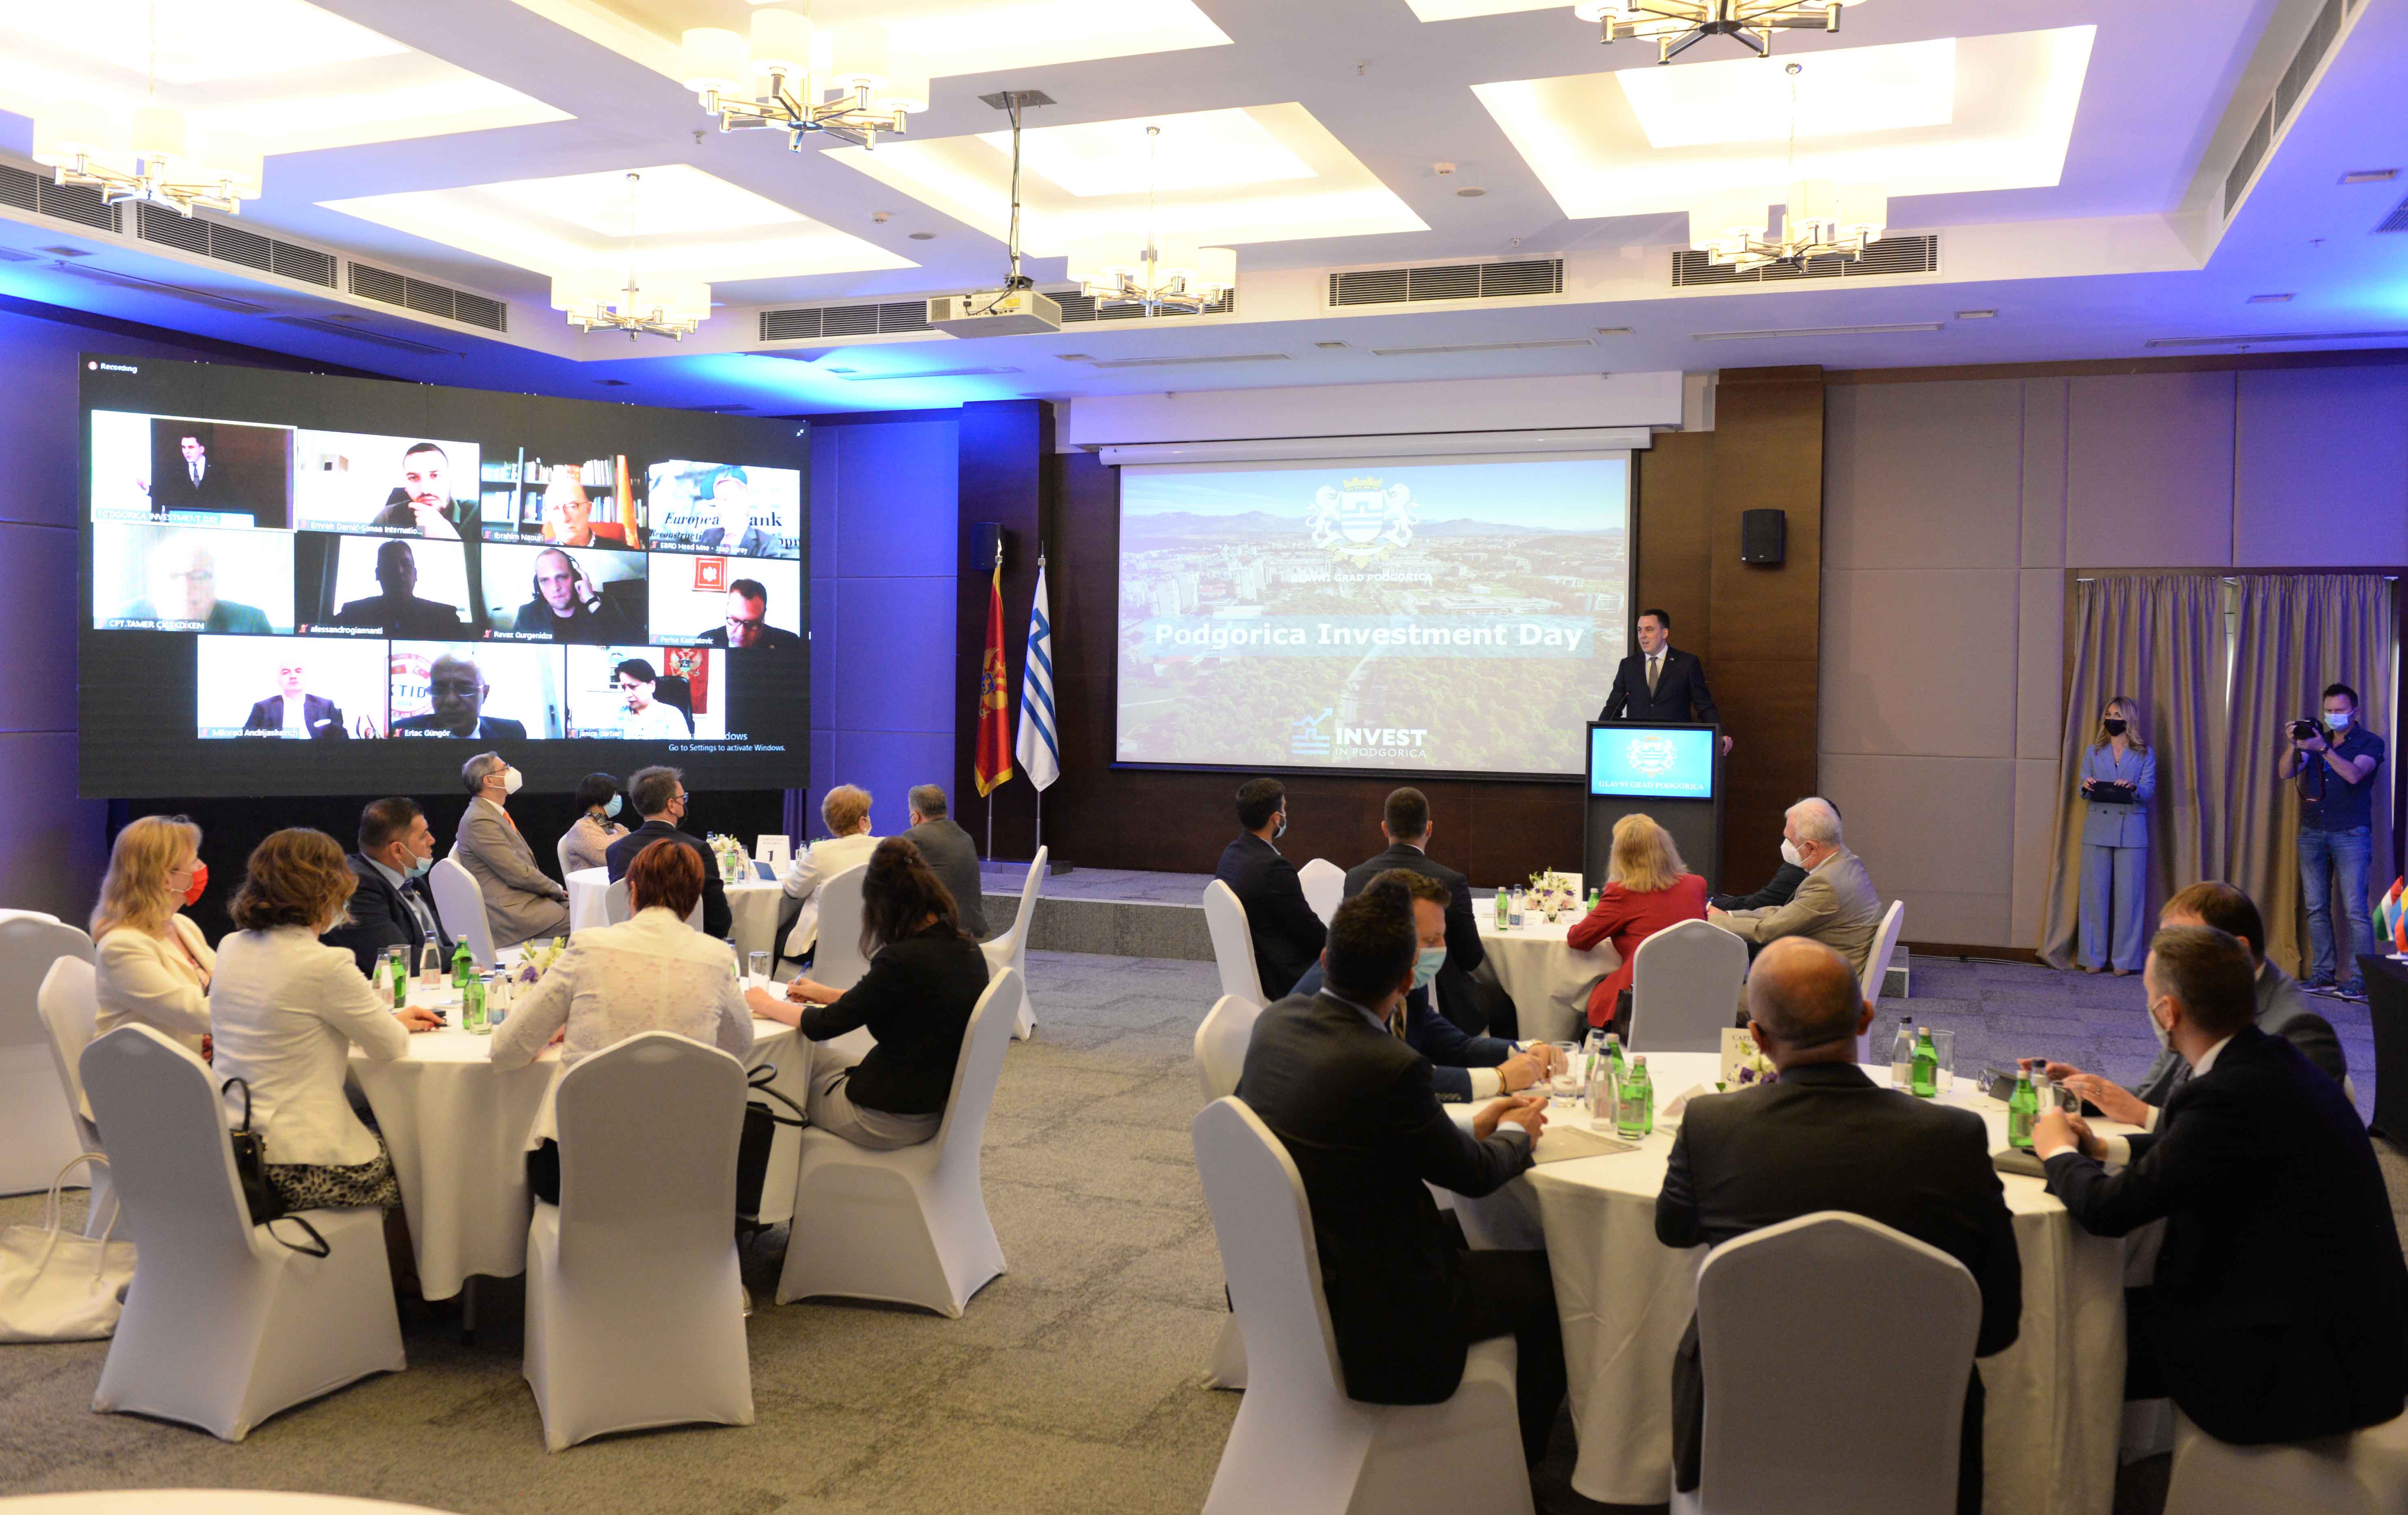 Održan Podgorica Investment Day; Glavni grad predstavio biznis zone